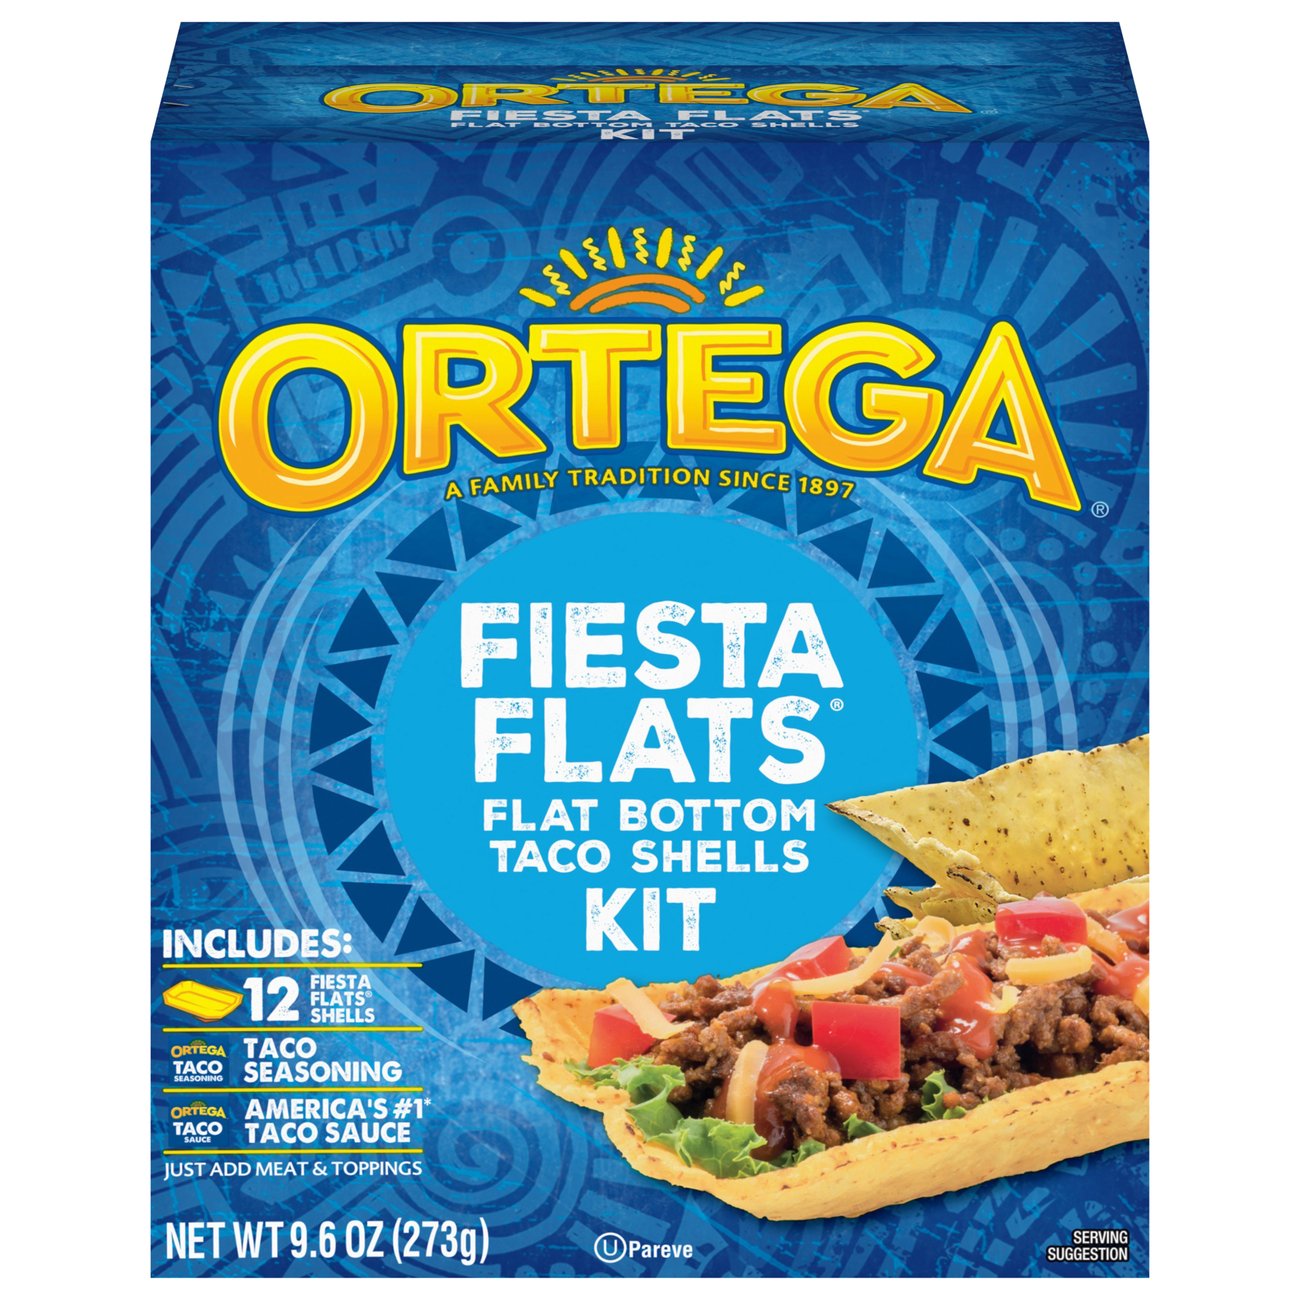 Ortega Taco Seasoning Instructions